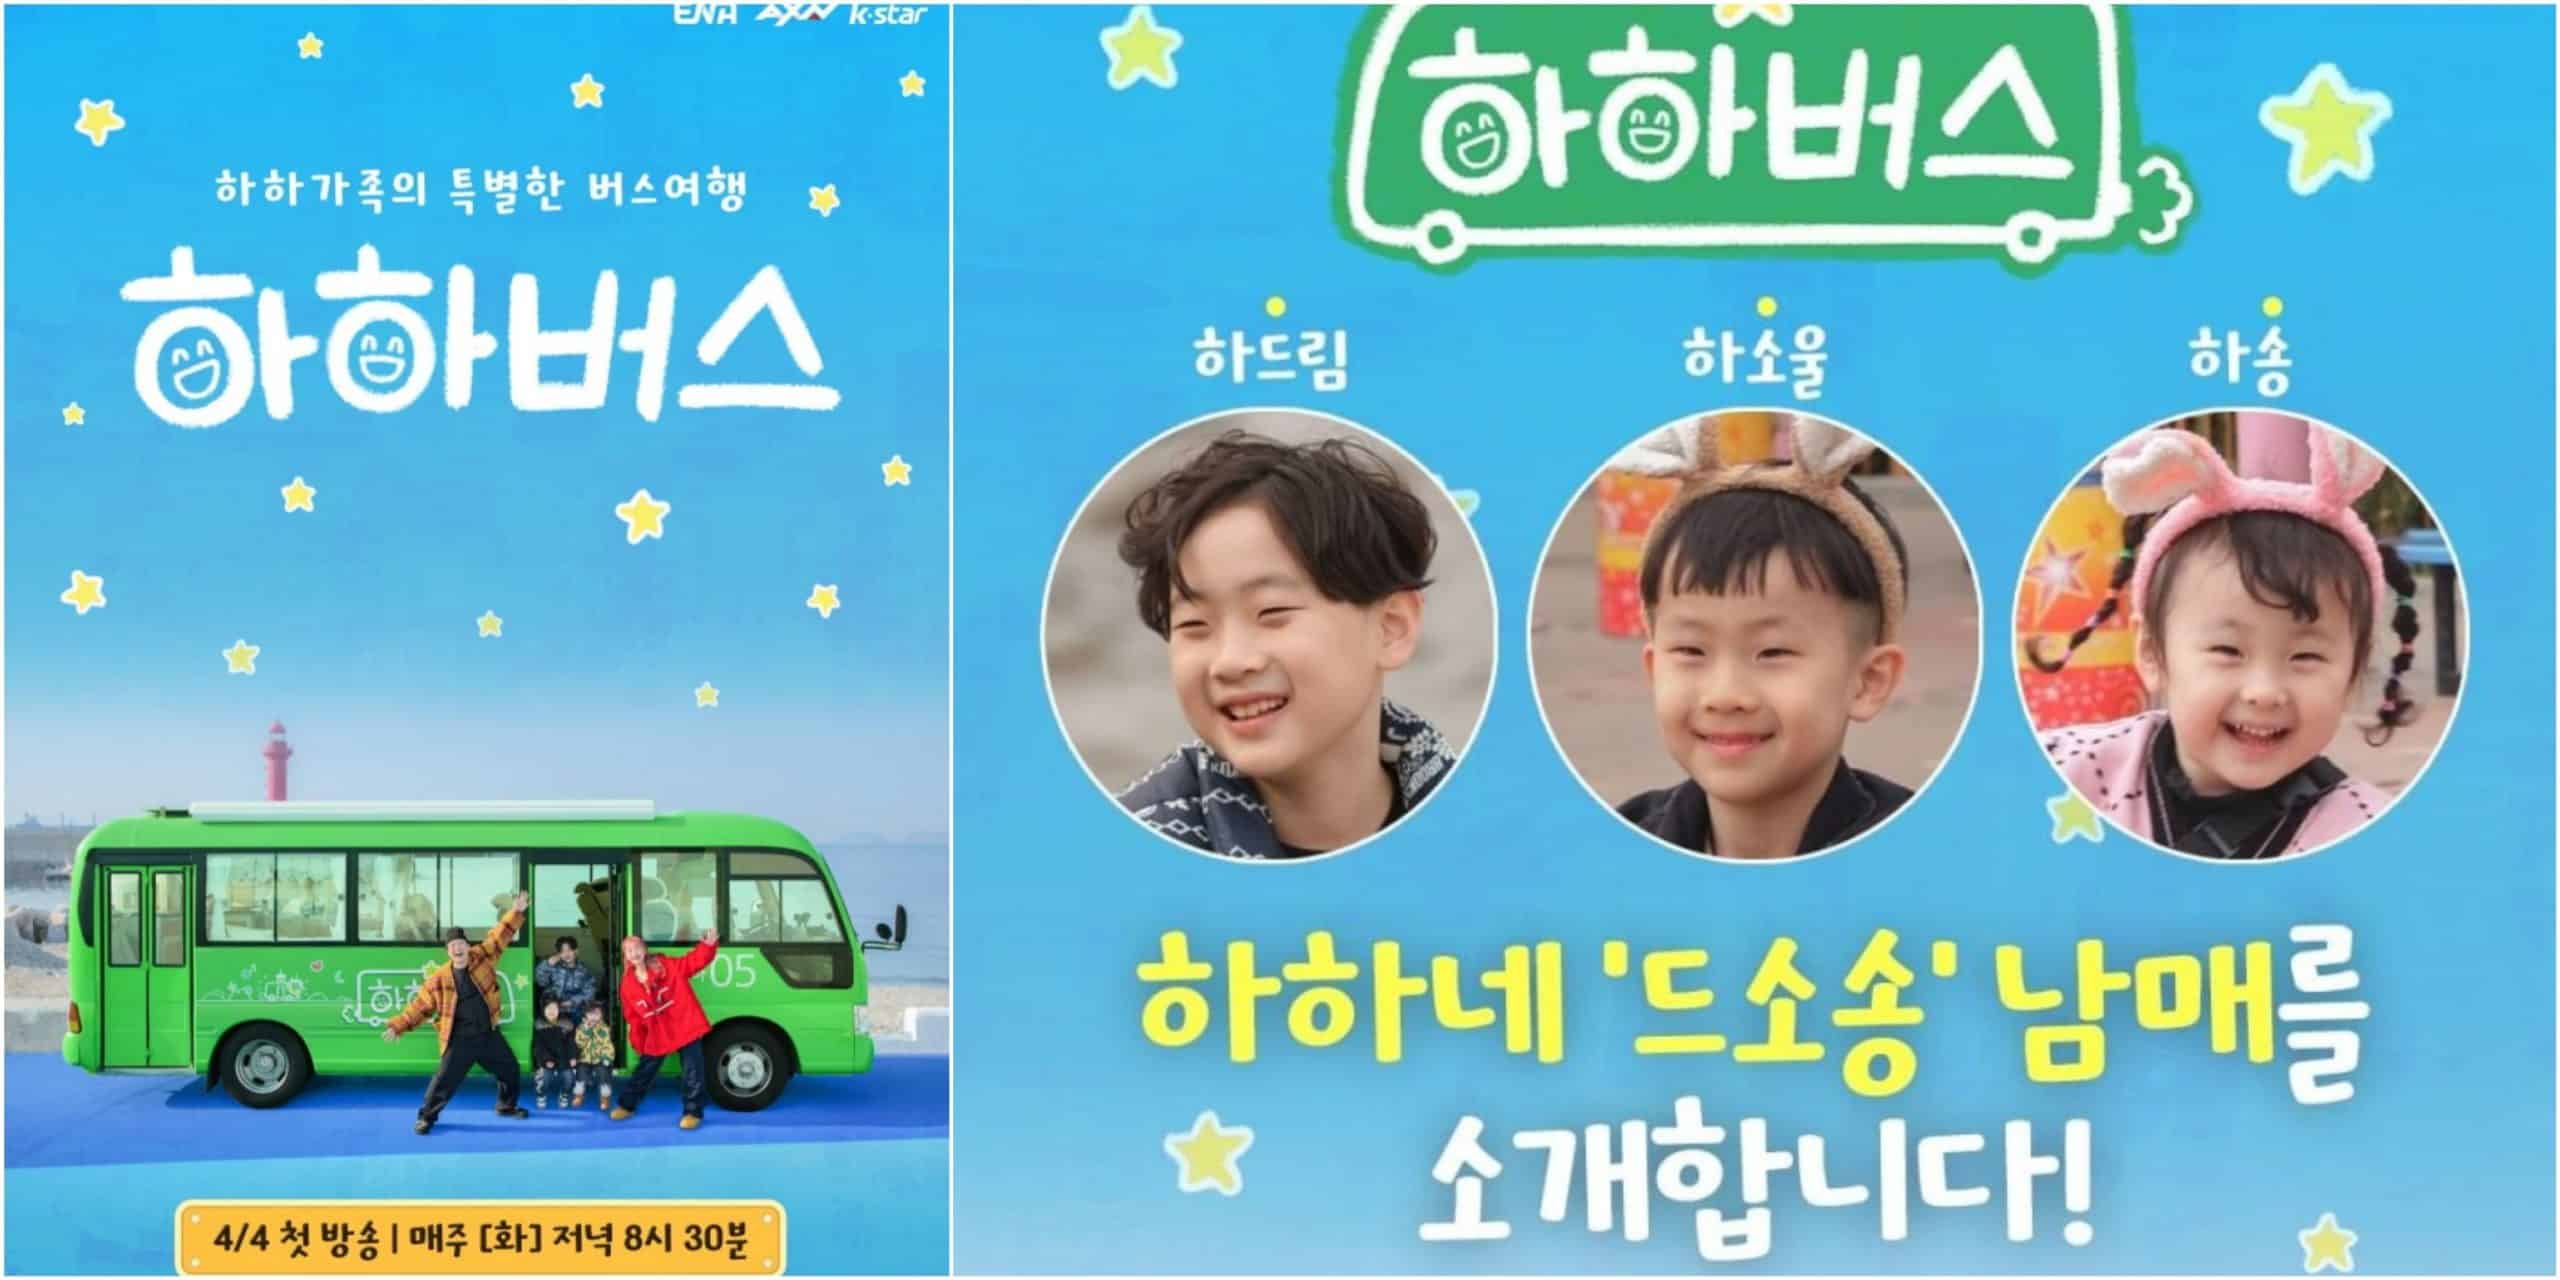 Korean Variety Show Ha Ha Bus Episode 11 Release Date